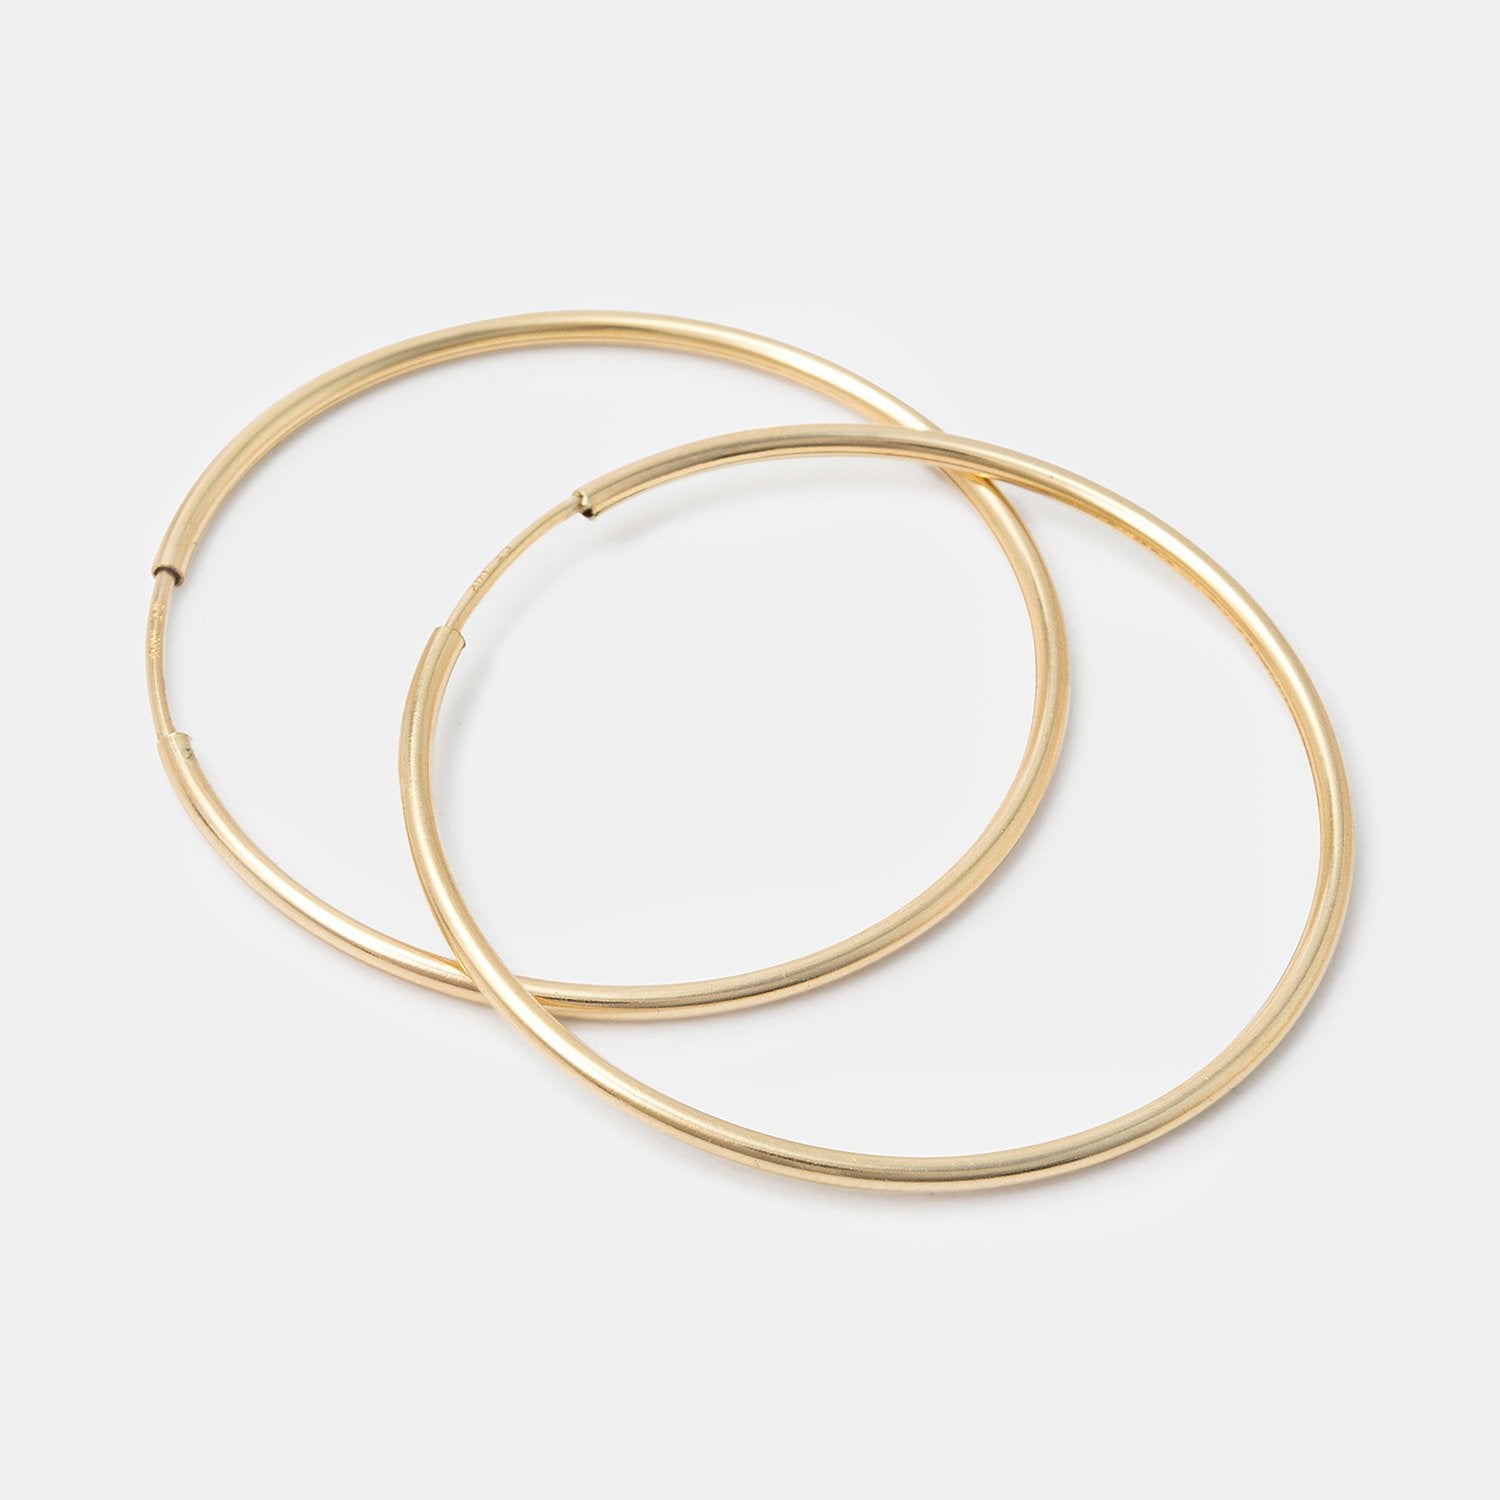 Endless hoop earrings: gold - Simone Walsh Jewellery Australia